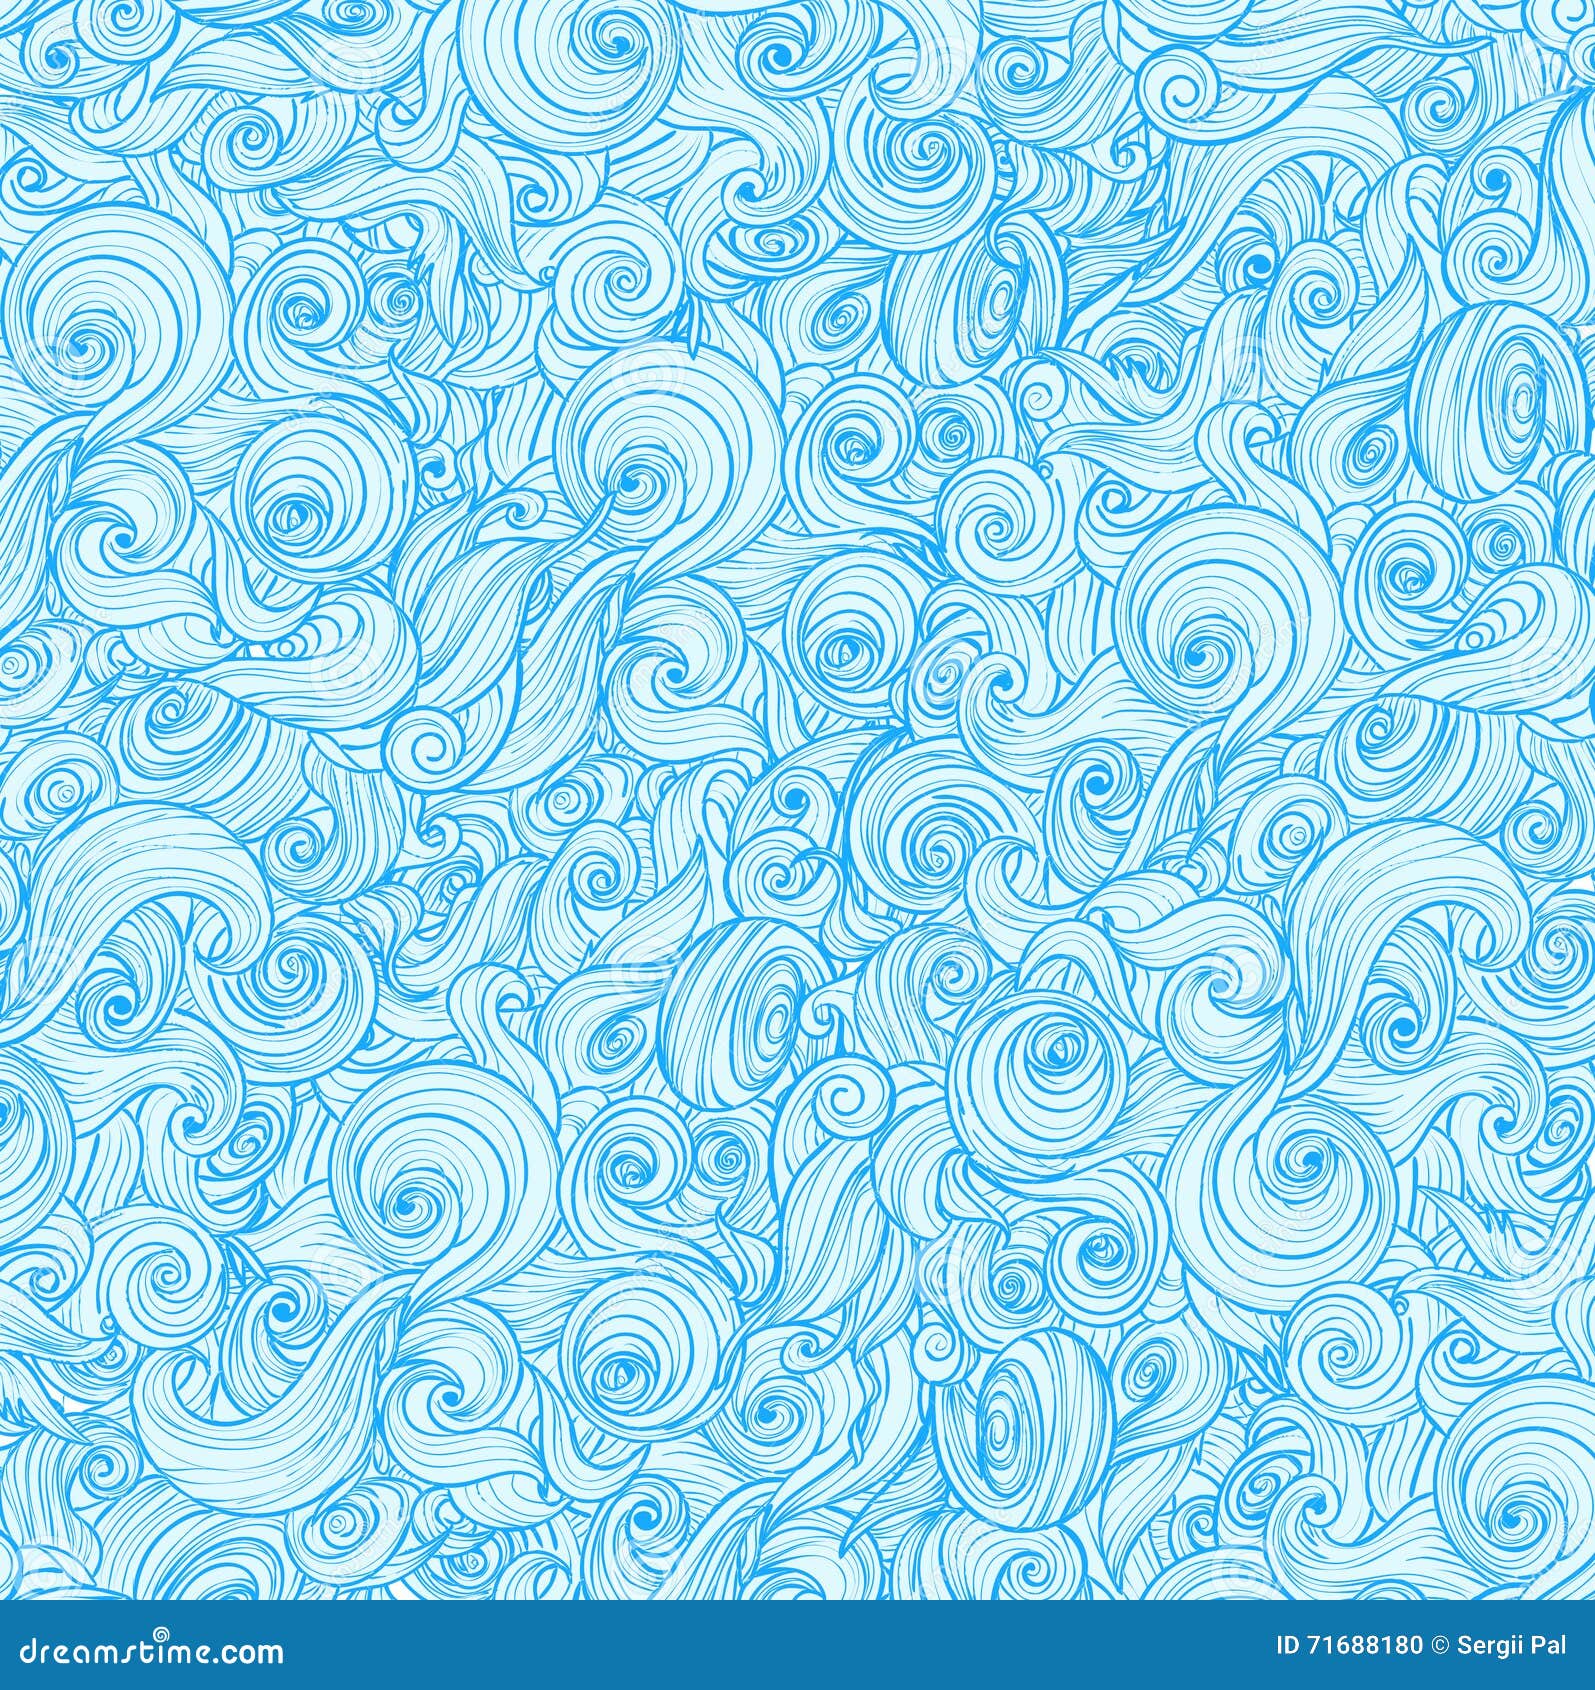 Curly pattern stock illustration. Illustration of abstract - 71688180